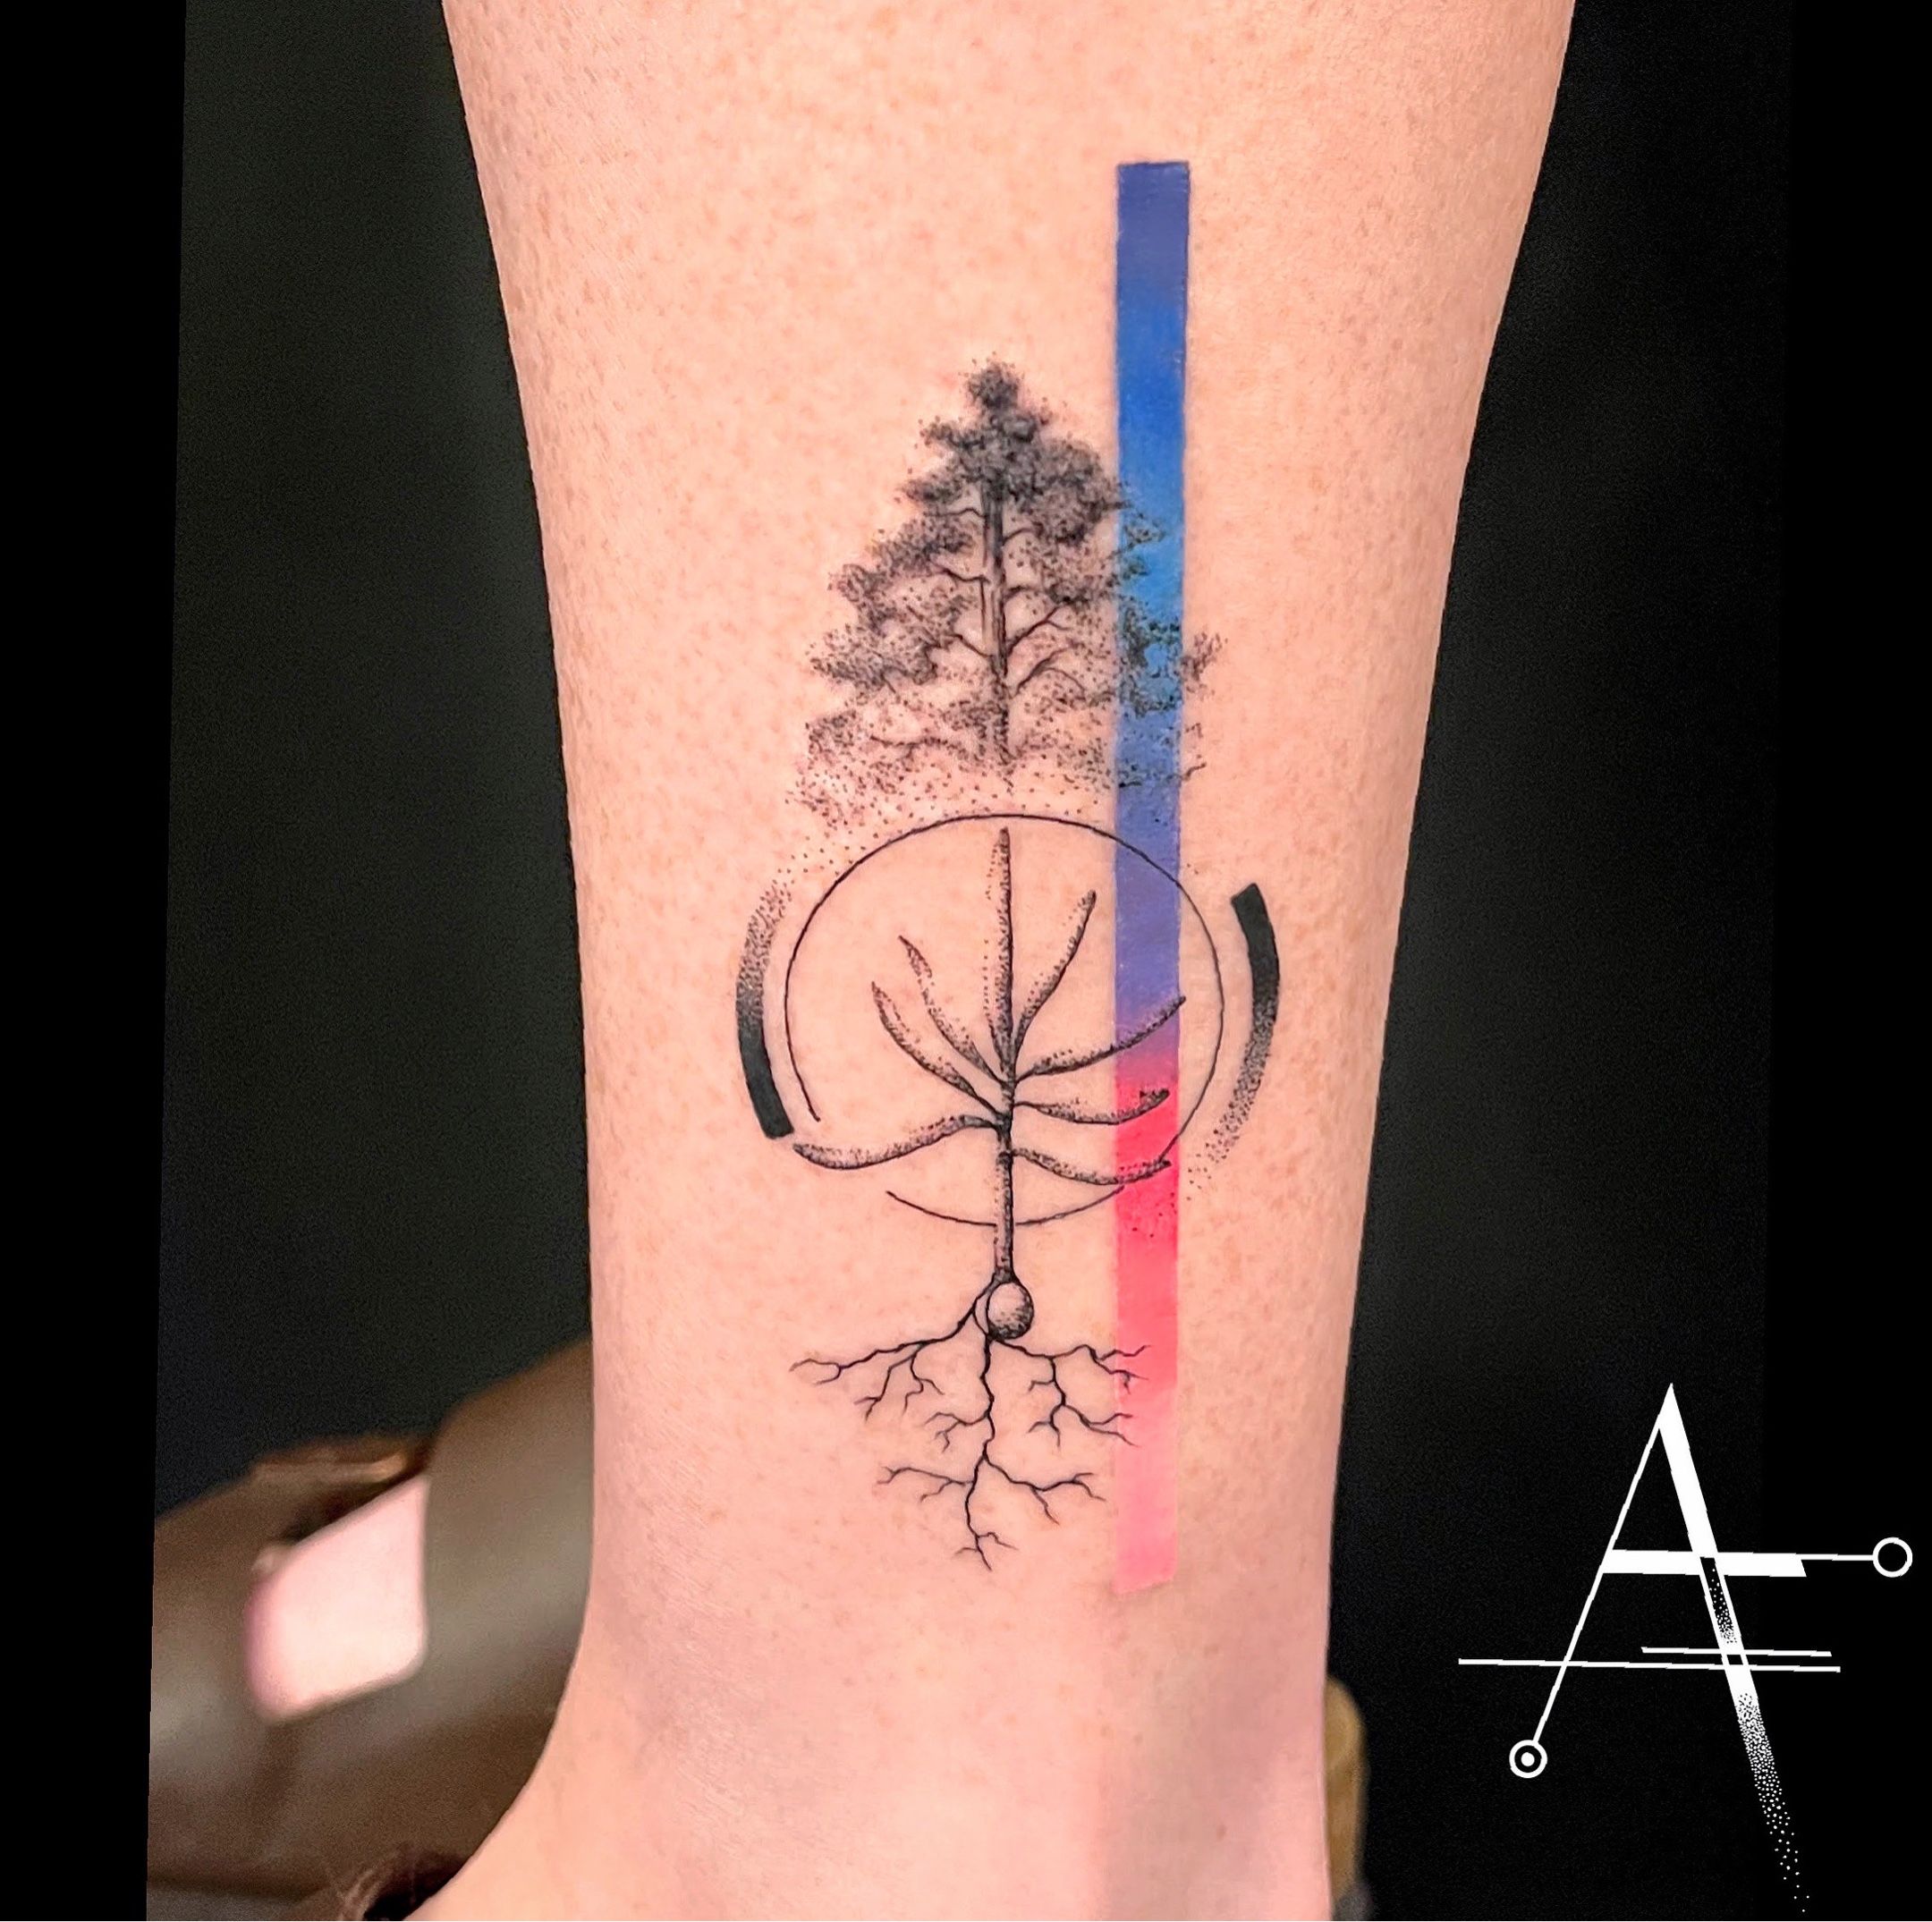 Yosemite, burning man, sequoia, redwood, ferns, nature tattoo idea |  TattoosAI